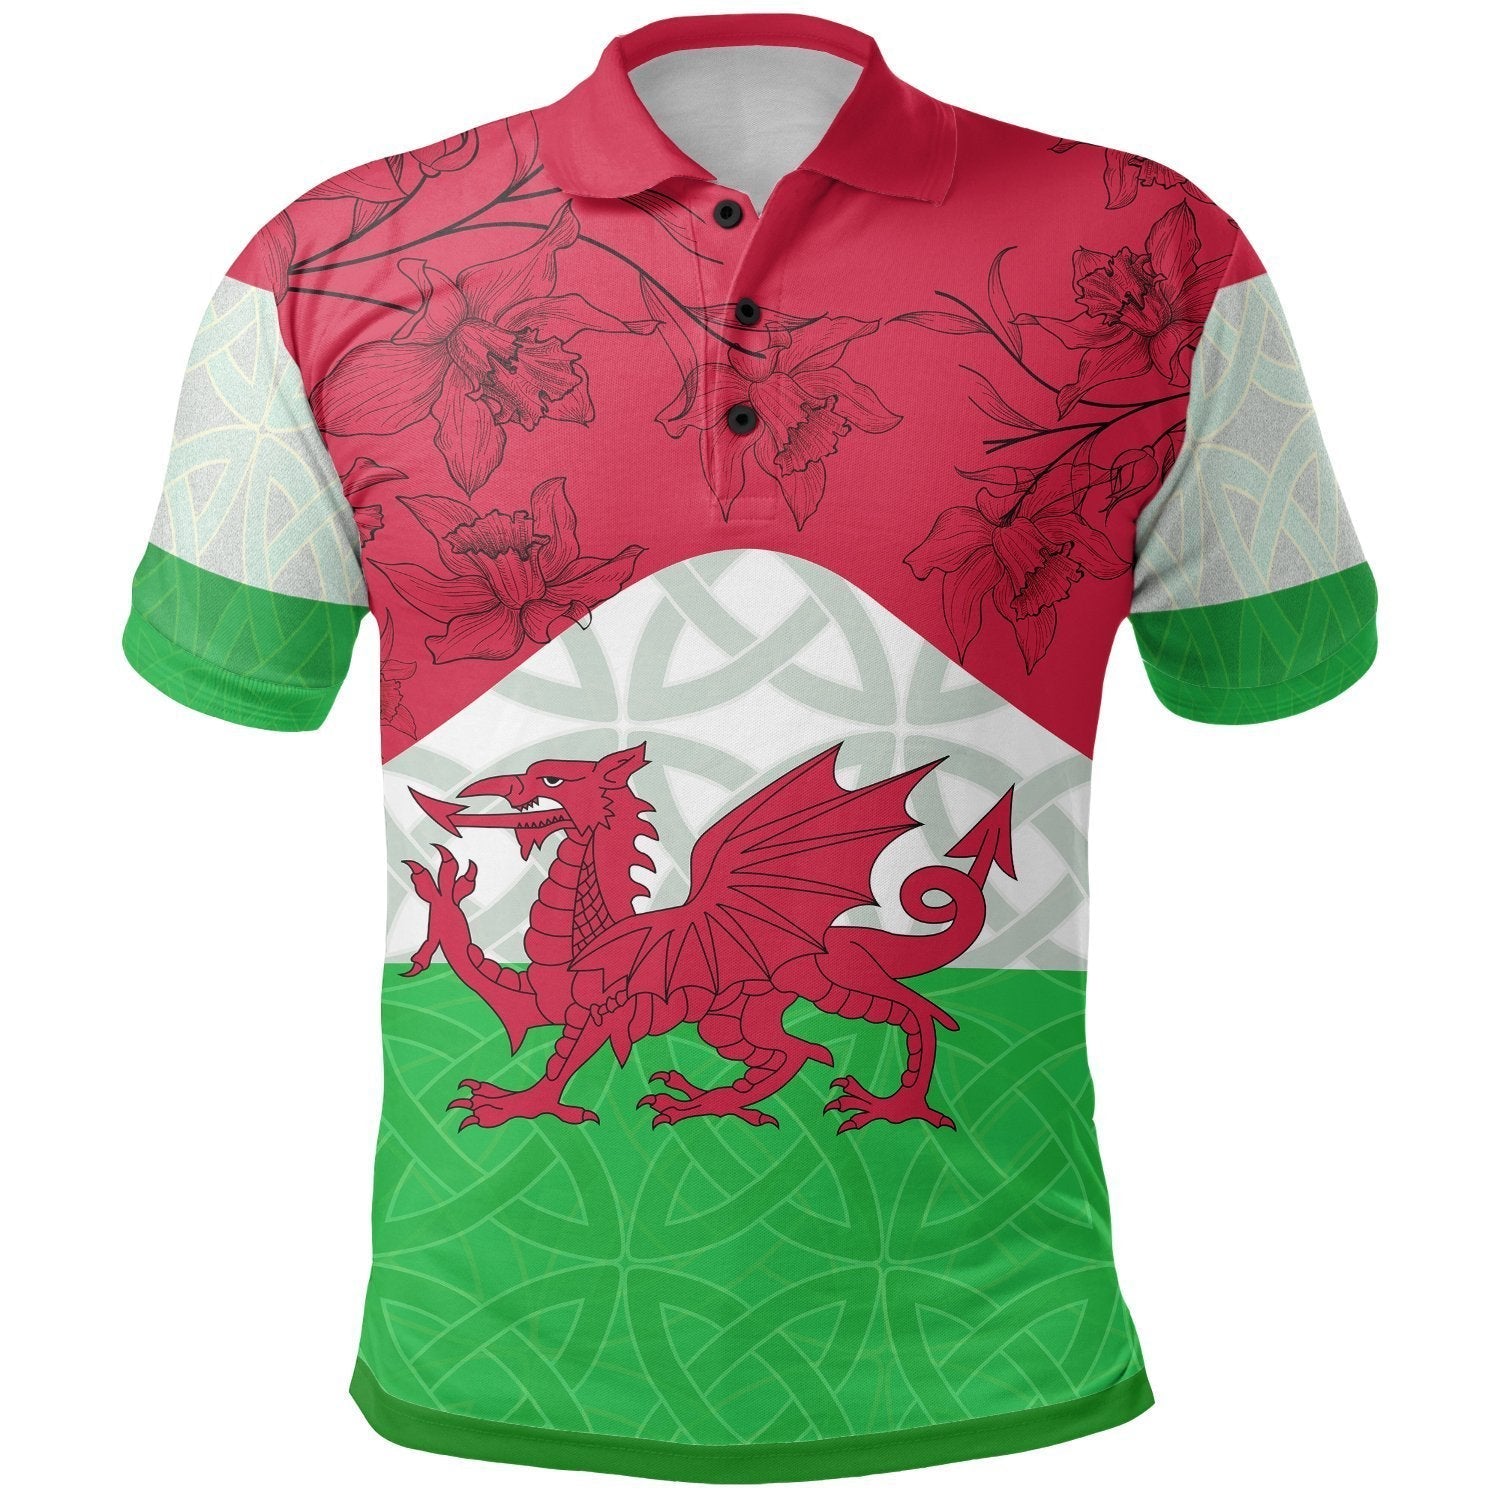 wales-celtic-polo-shirt-cymru-combined-daffodil